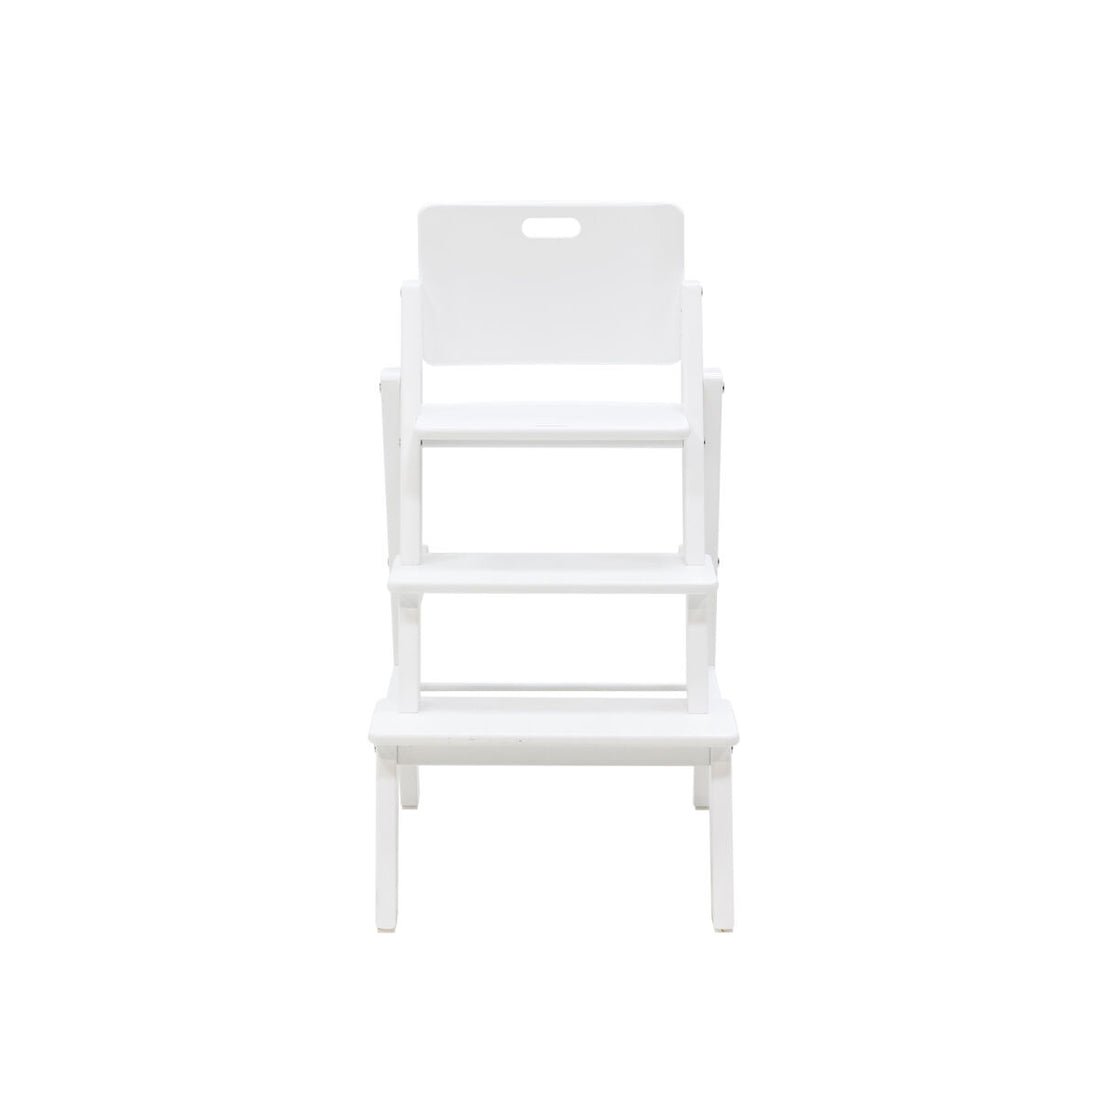 bopita-highchair-with-brace-stully-white-bopt-11205911- (4)